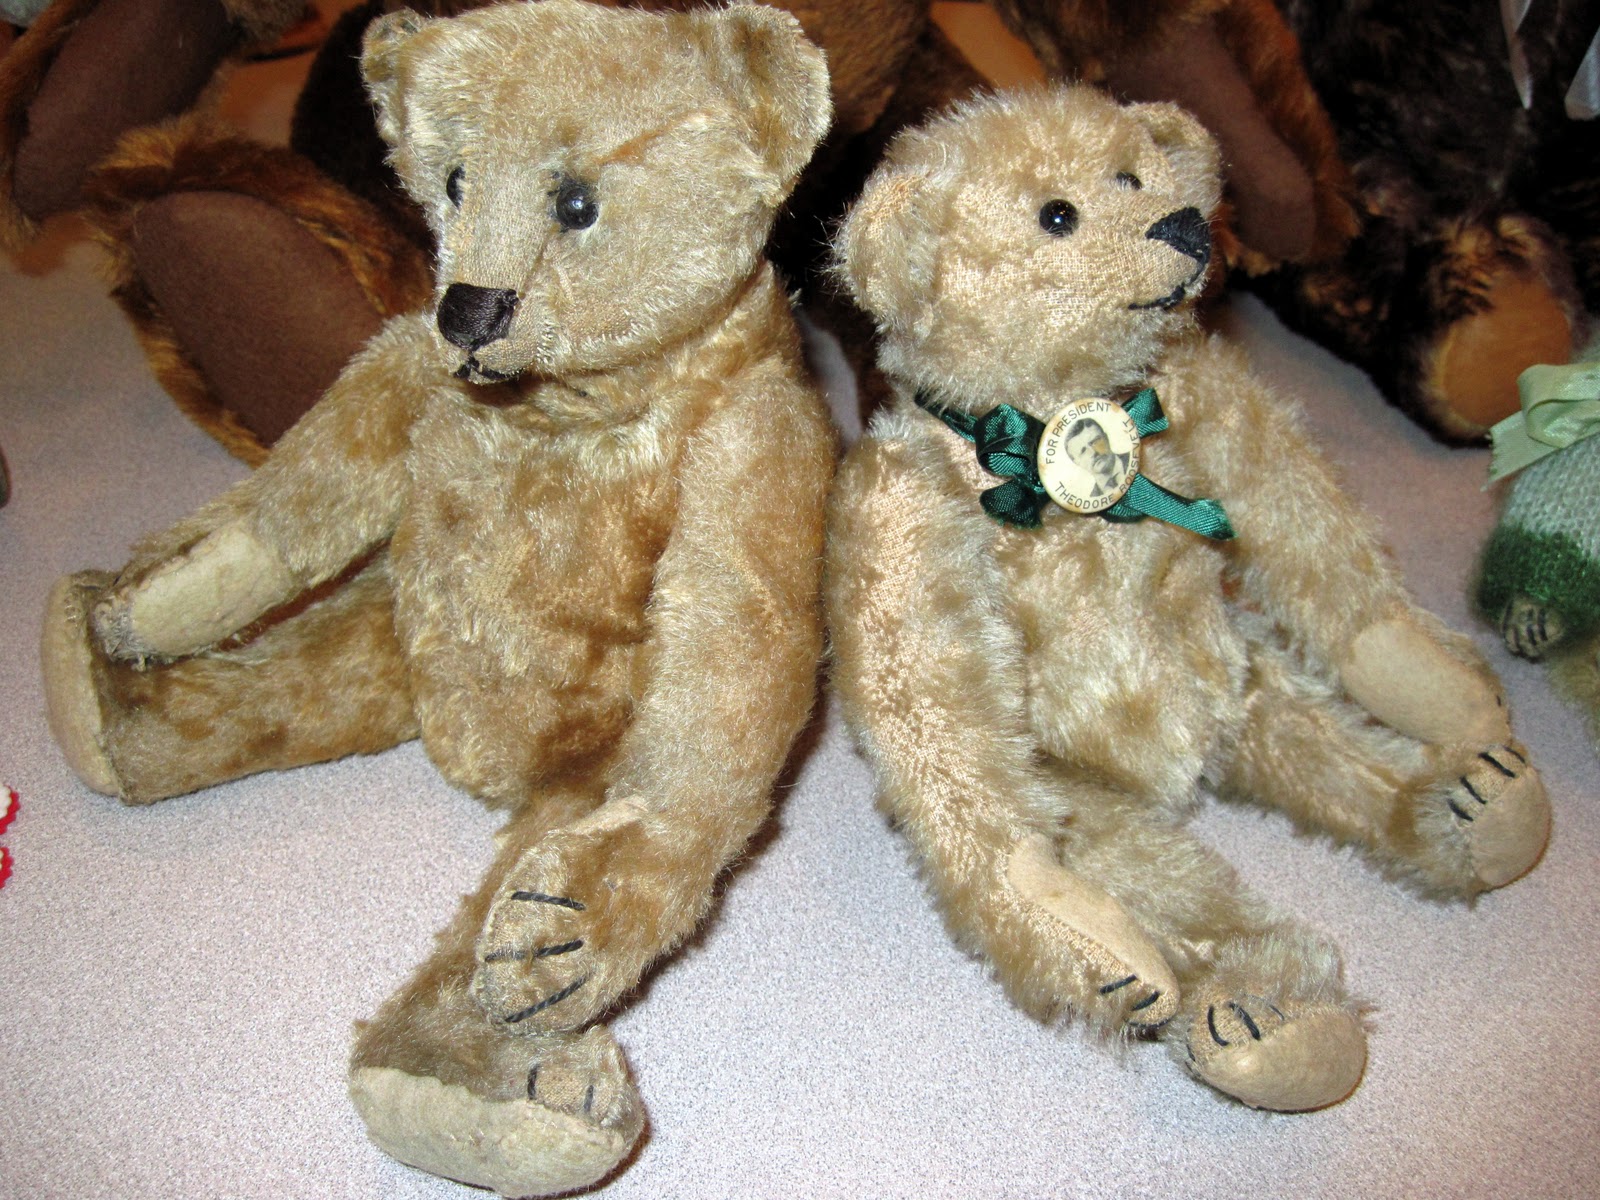 some teddy bears